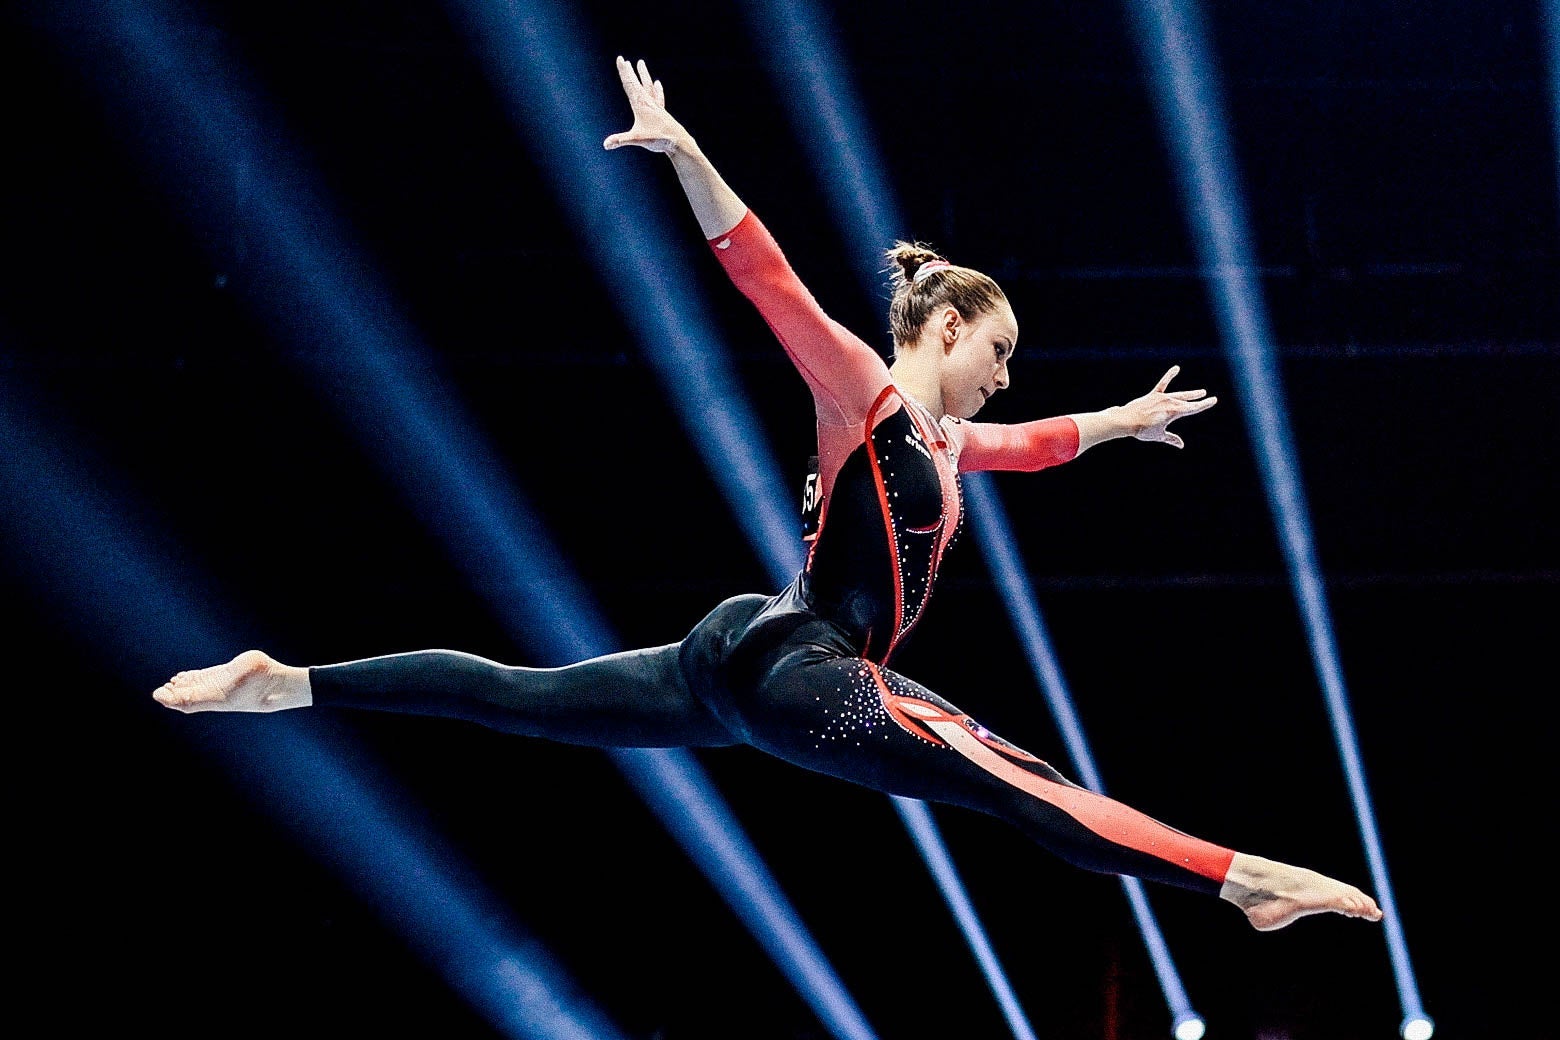 Gymnastics unitards German women replacing leotards in European championships are revolutionary.